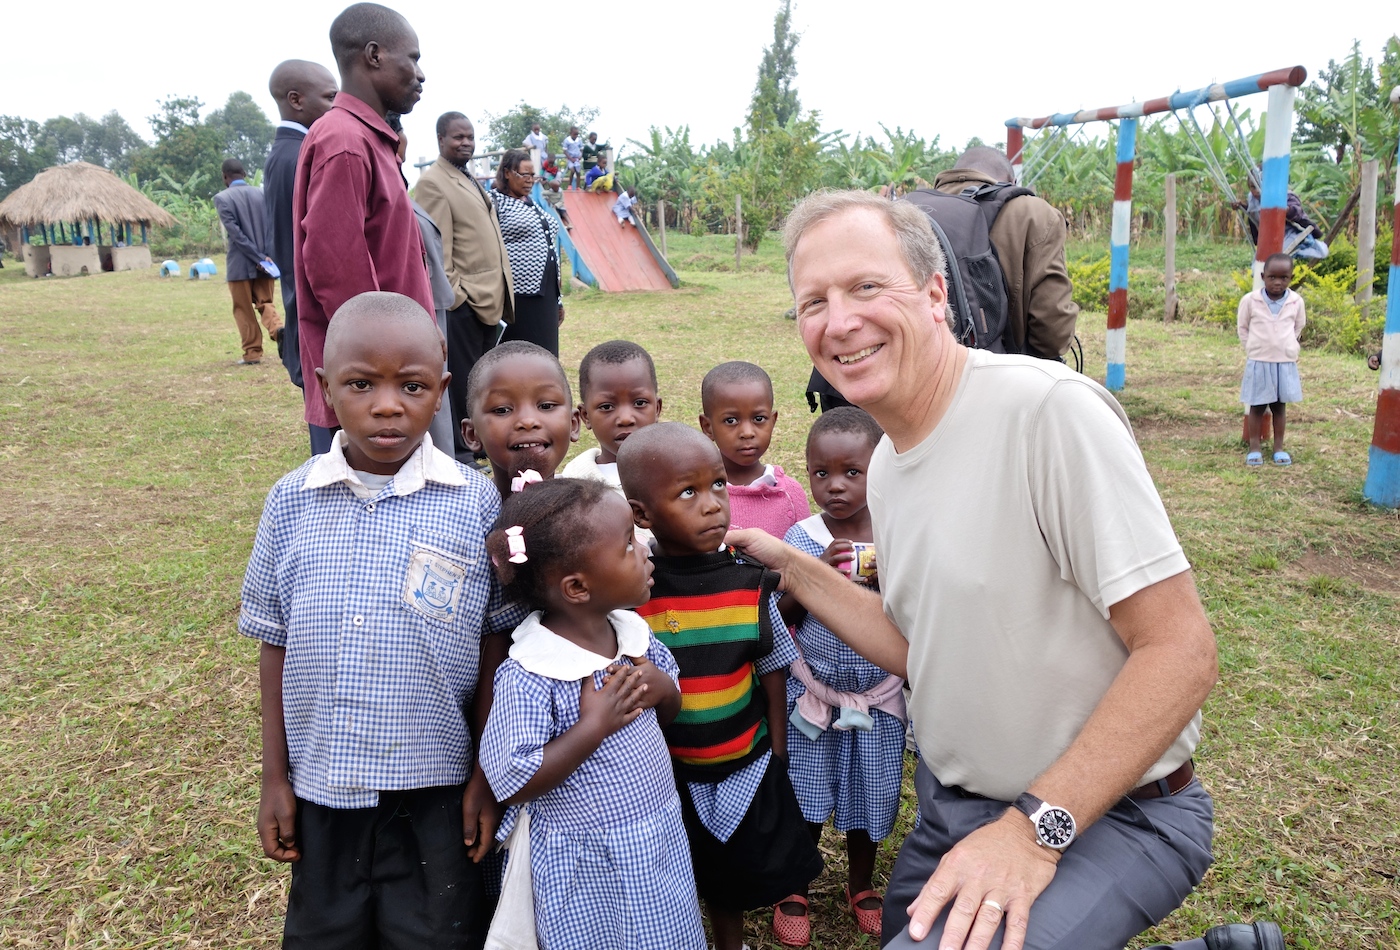 Midwest Regional Board member Bill Dietz on a U.S. Fund for UNICEF field visit to Uganda.